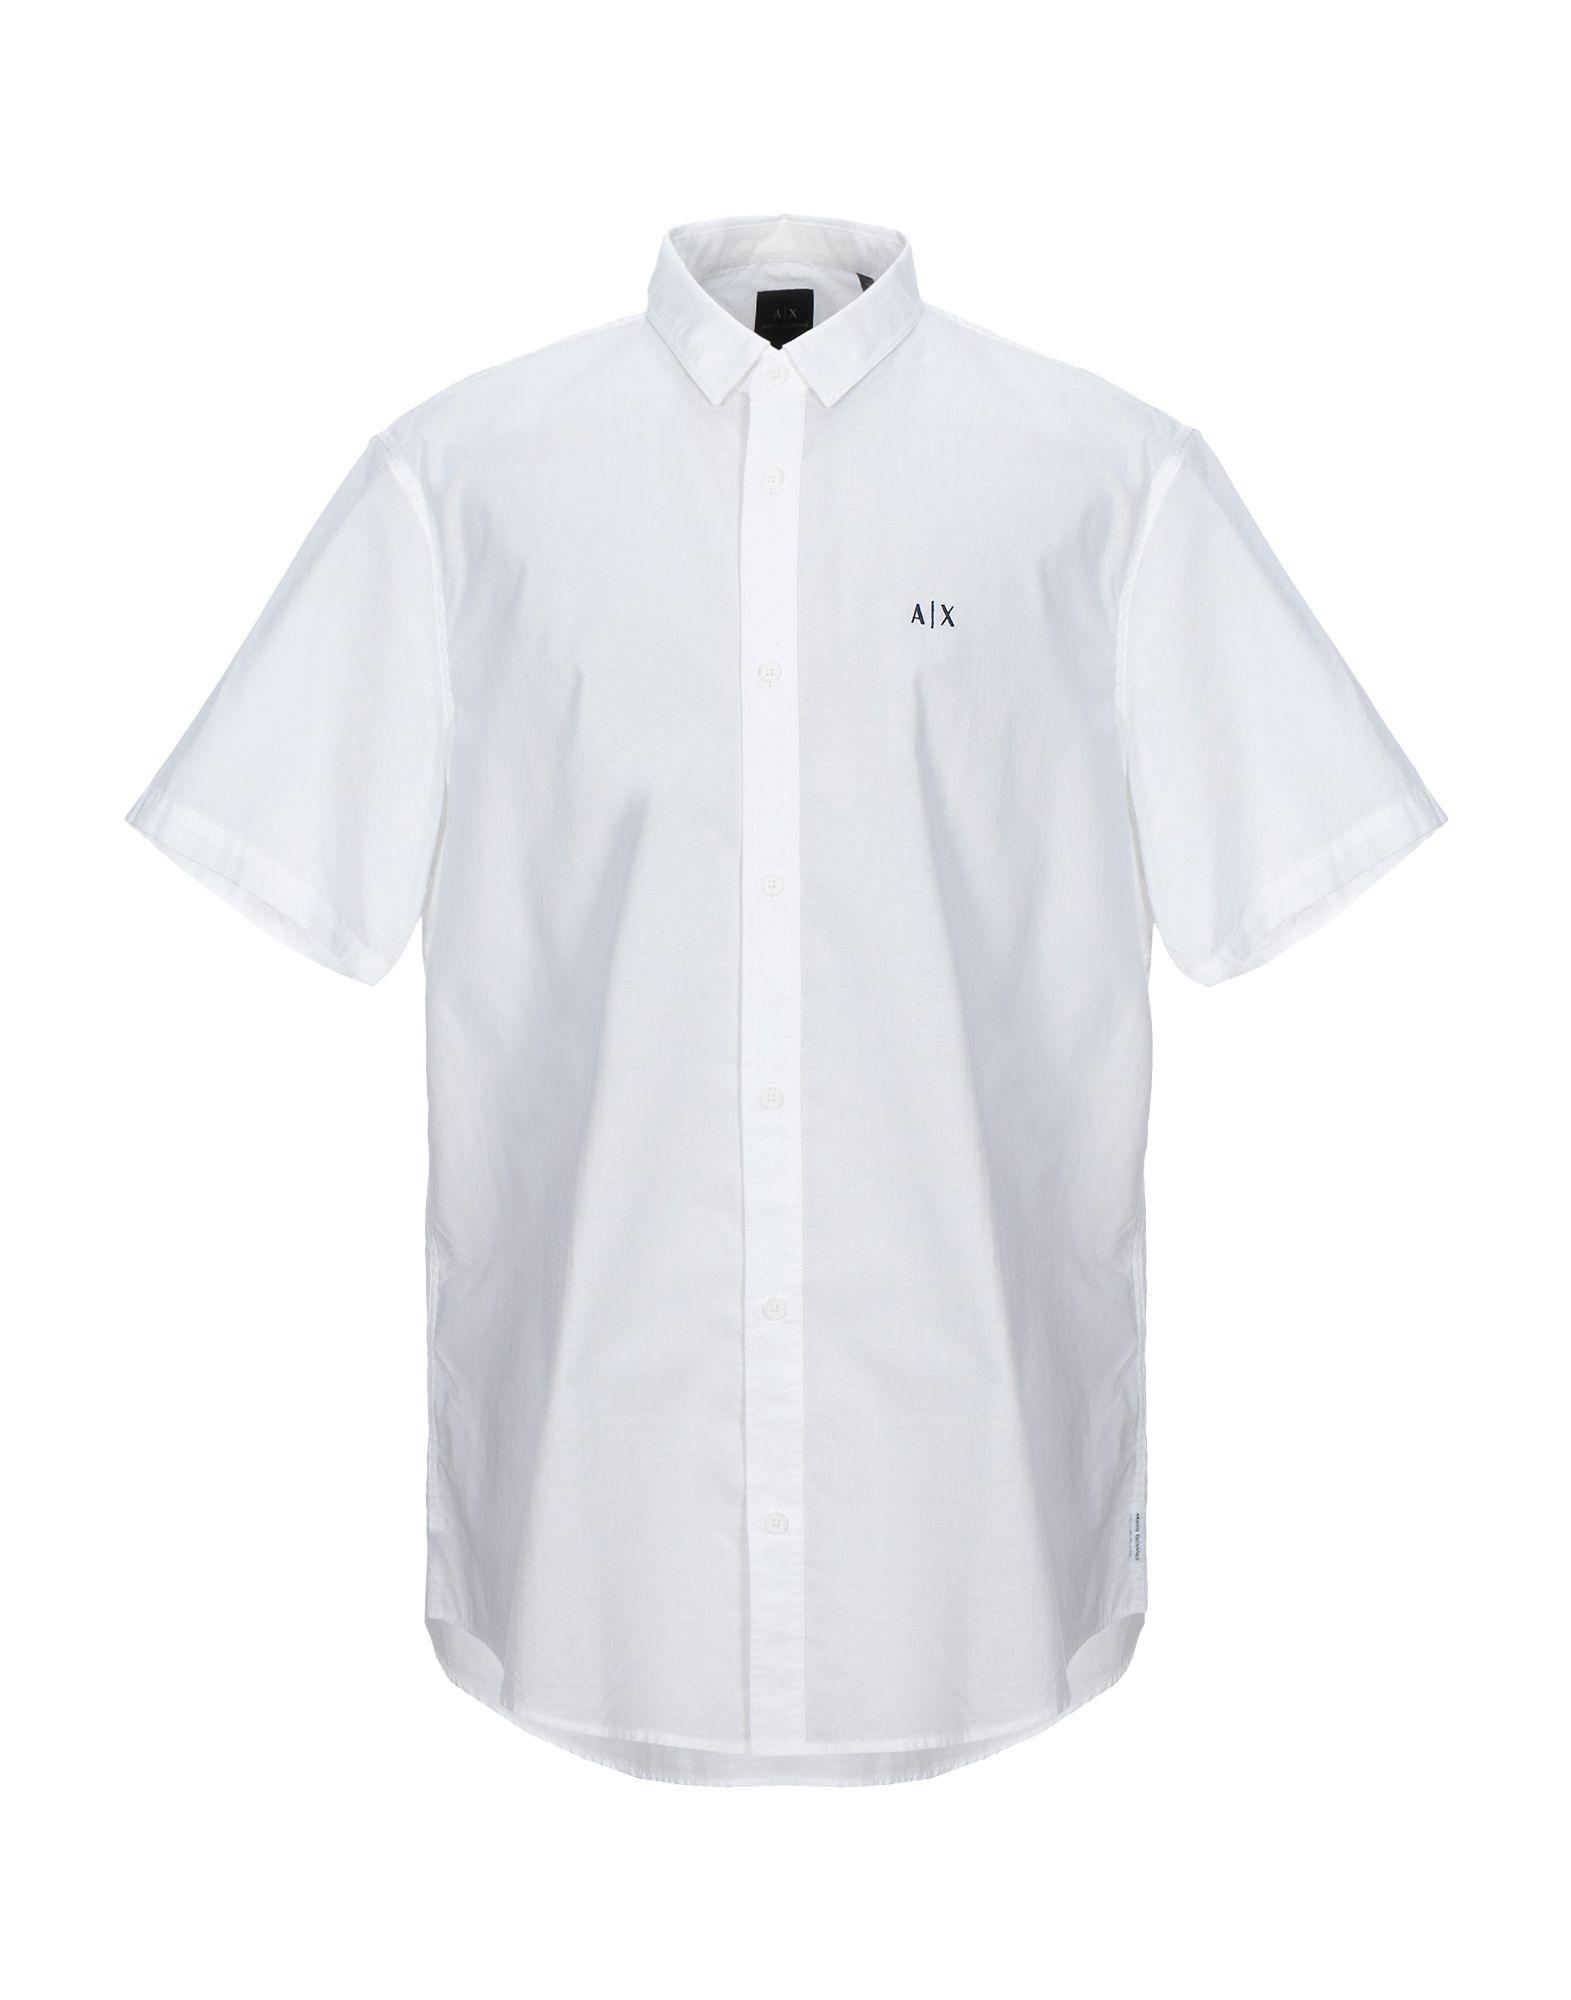 Armani Exchange Shirt in White for Men - Lyst